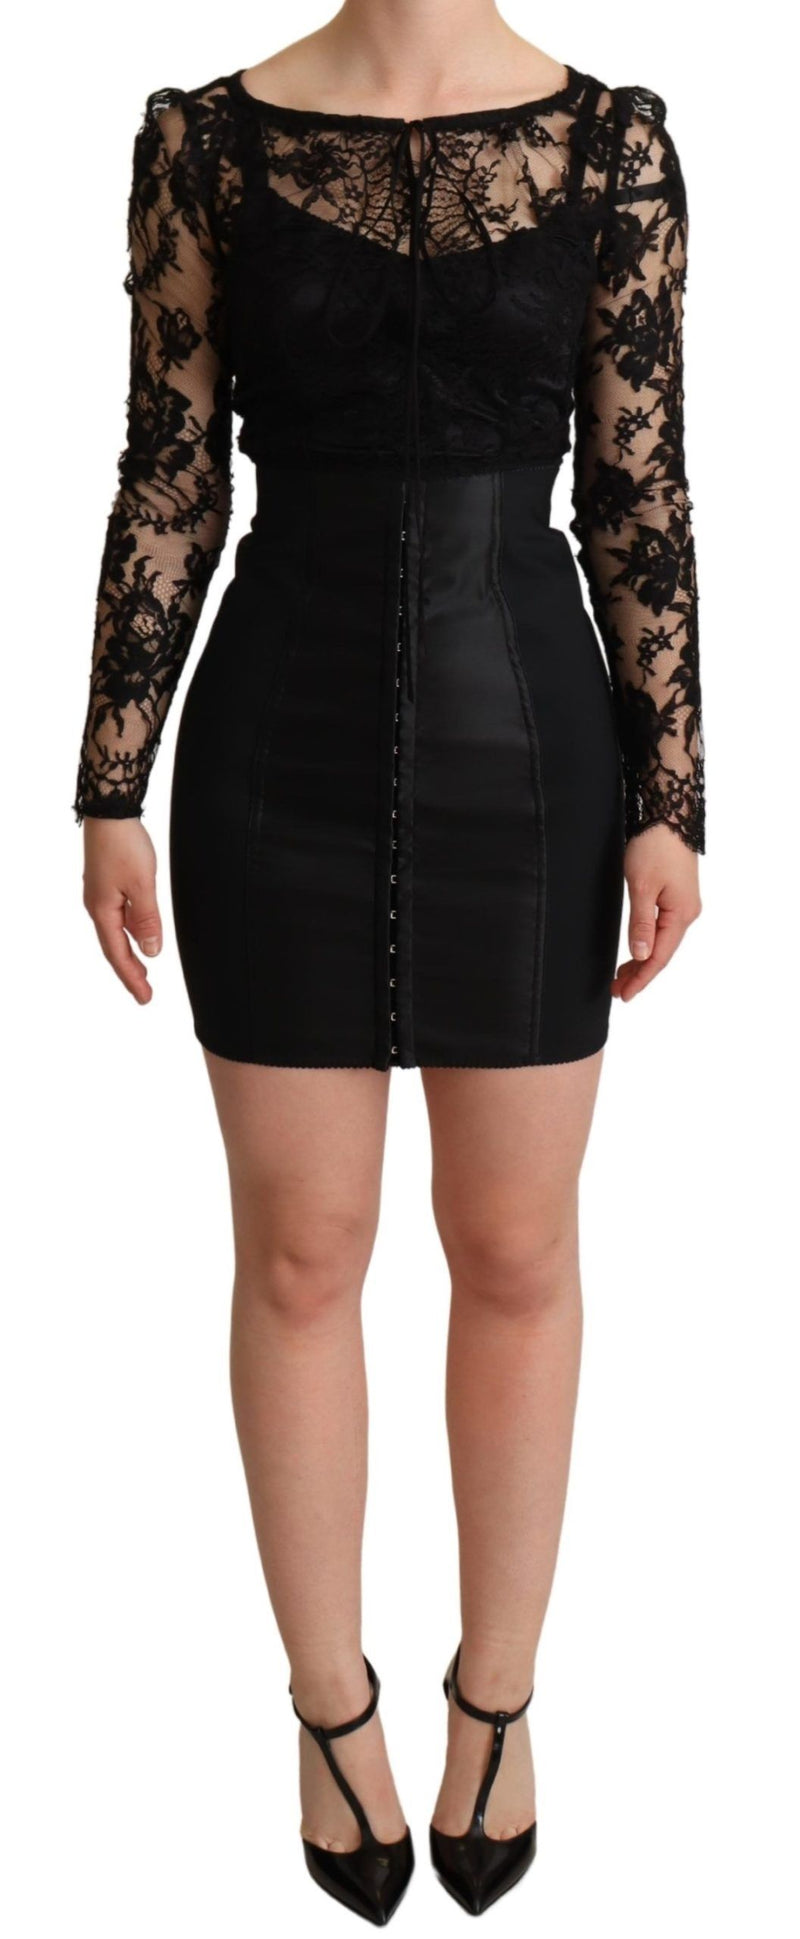 Dolce & Gabbana Black Fitted Lace Top Bodycon Mini Women's Dress